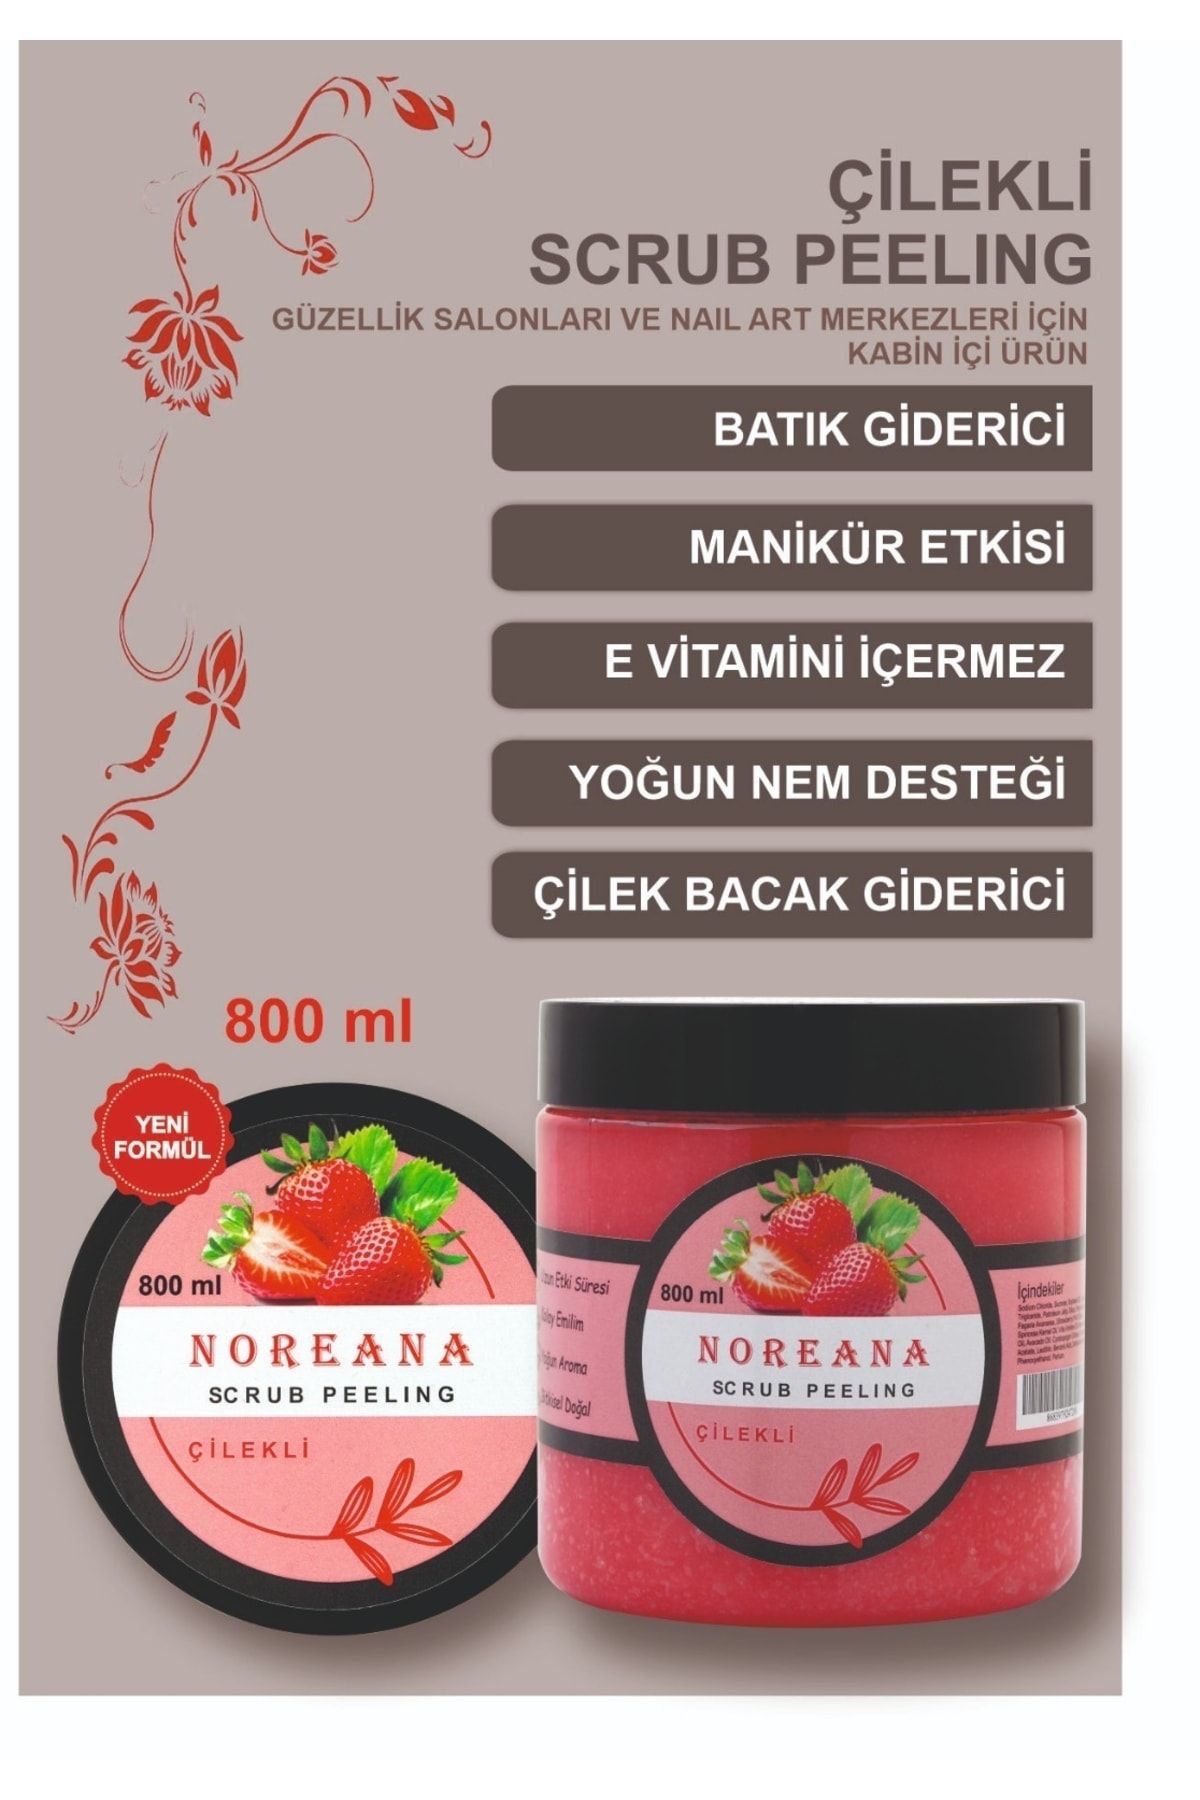 Noreana Çilekli 800ml Scrub Peeling & Çilek Bacak Giderici & Salon Boy